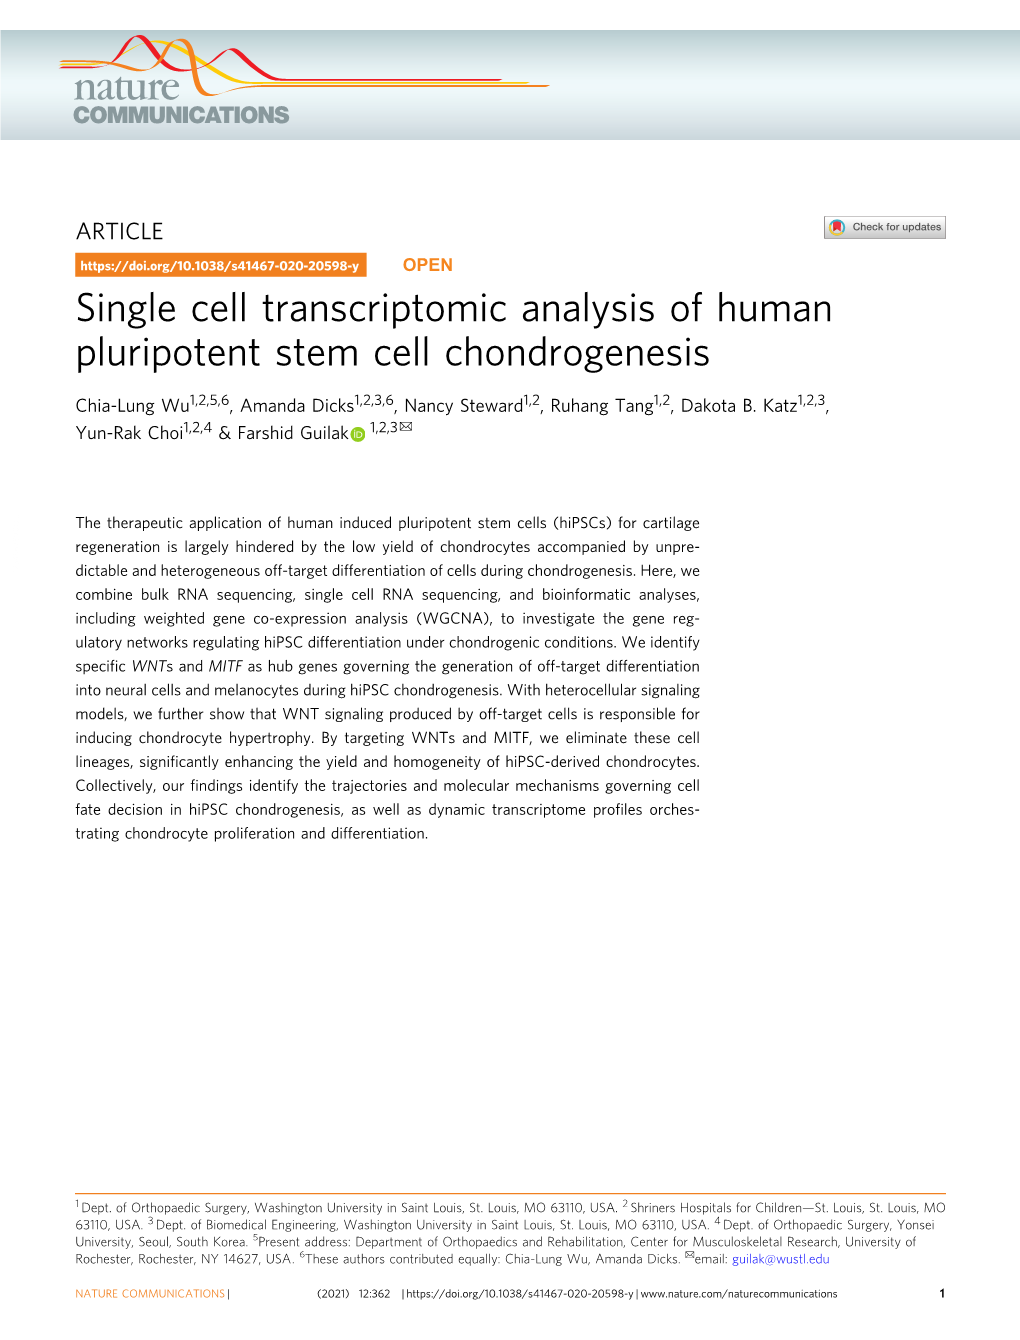 Single Cell Transcriptomic Analysis of Human Pluripotent Stem Cell Chondrogenesis